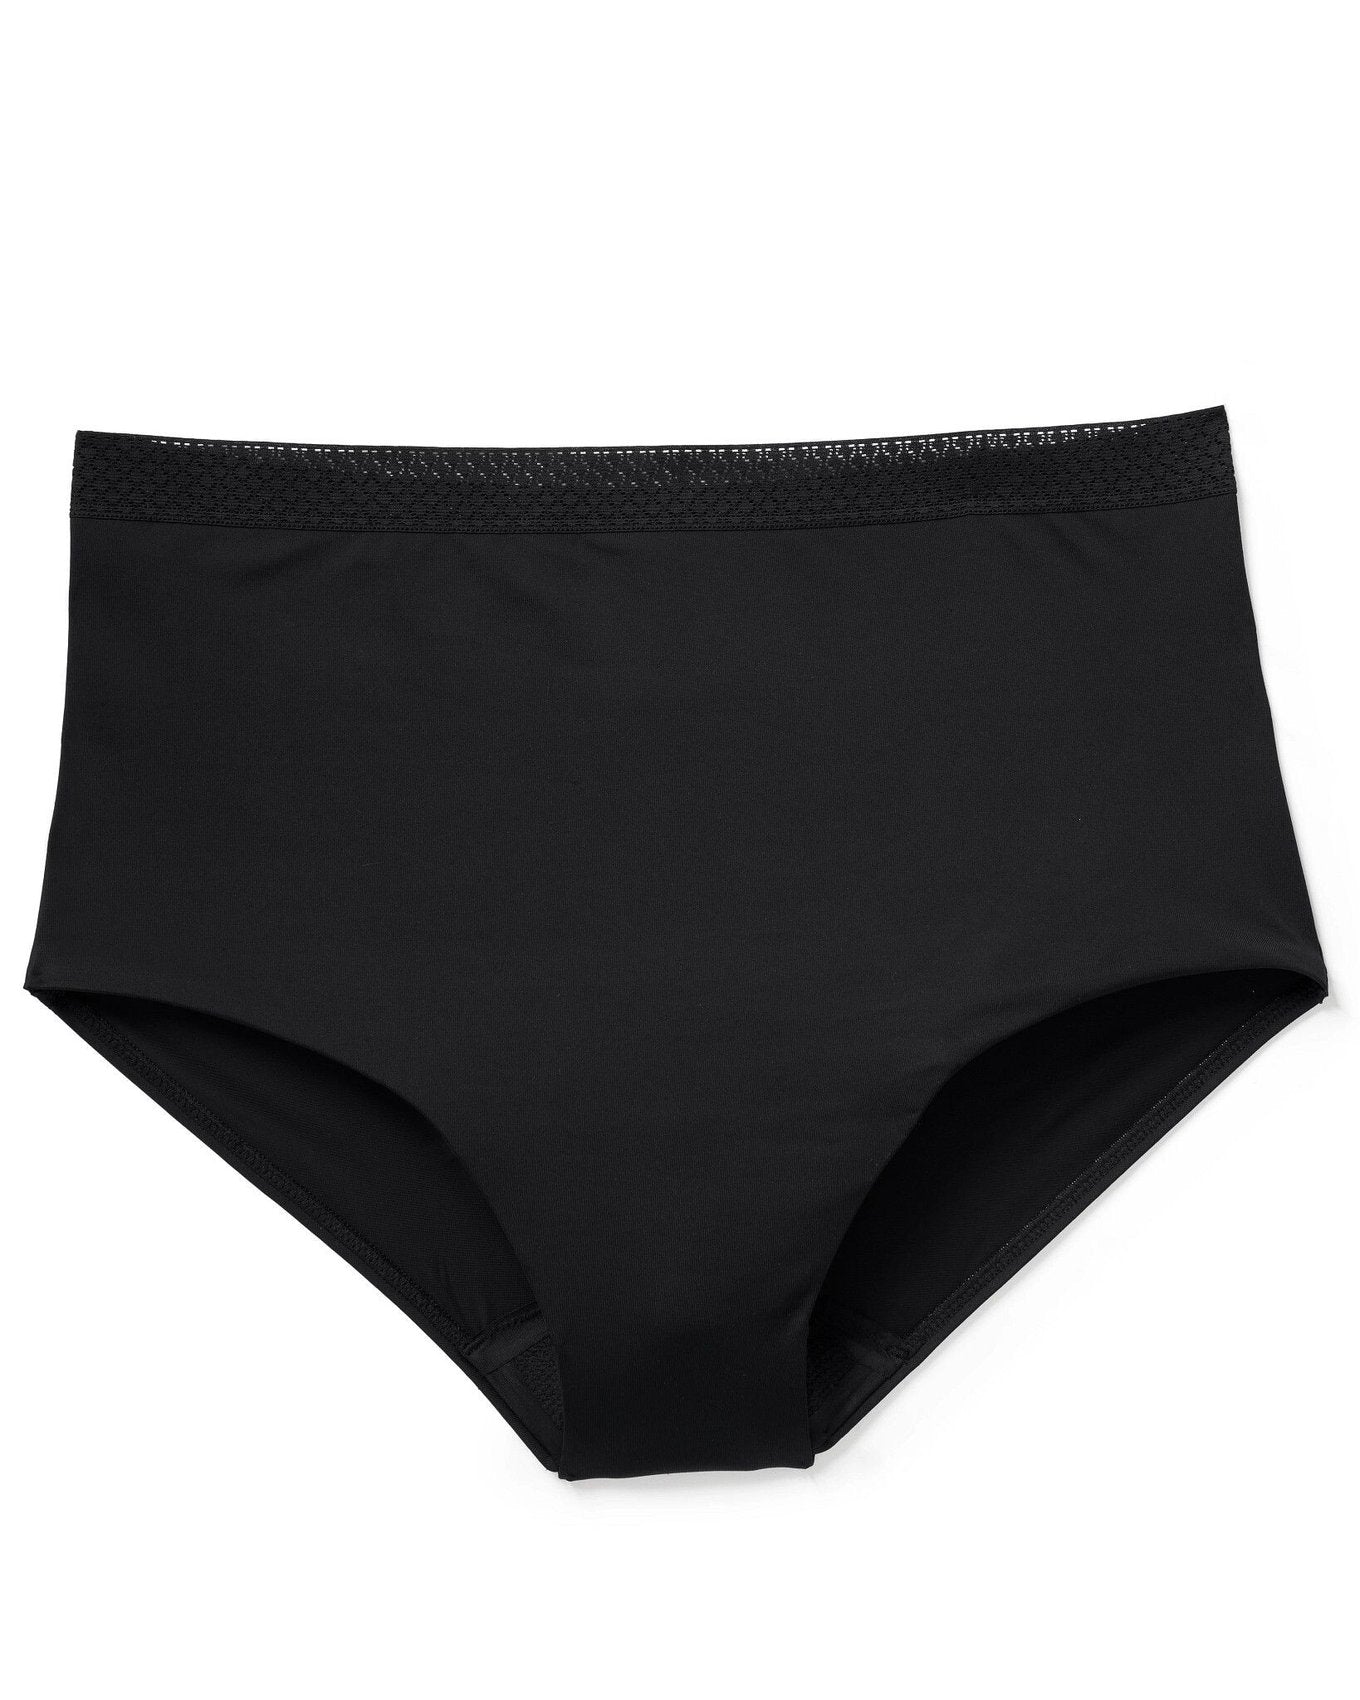 Comfortable Pee Leak Proof Underwear| Absorbs up to 15ml